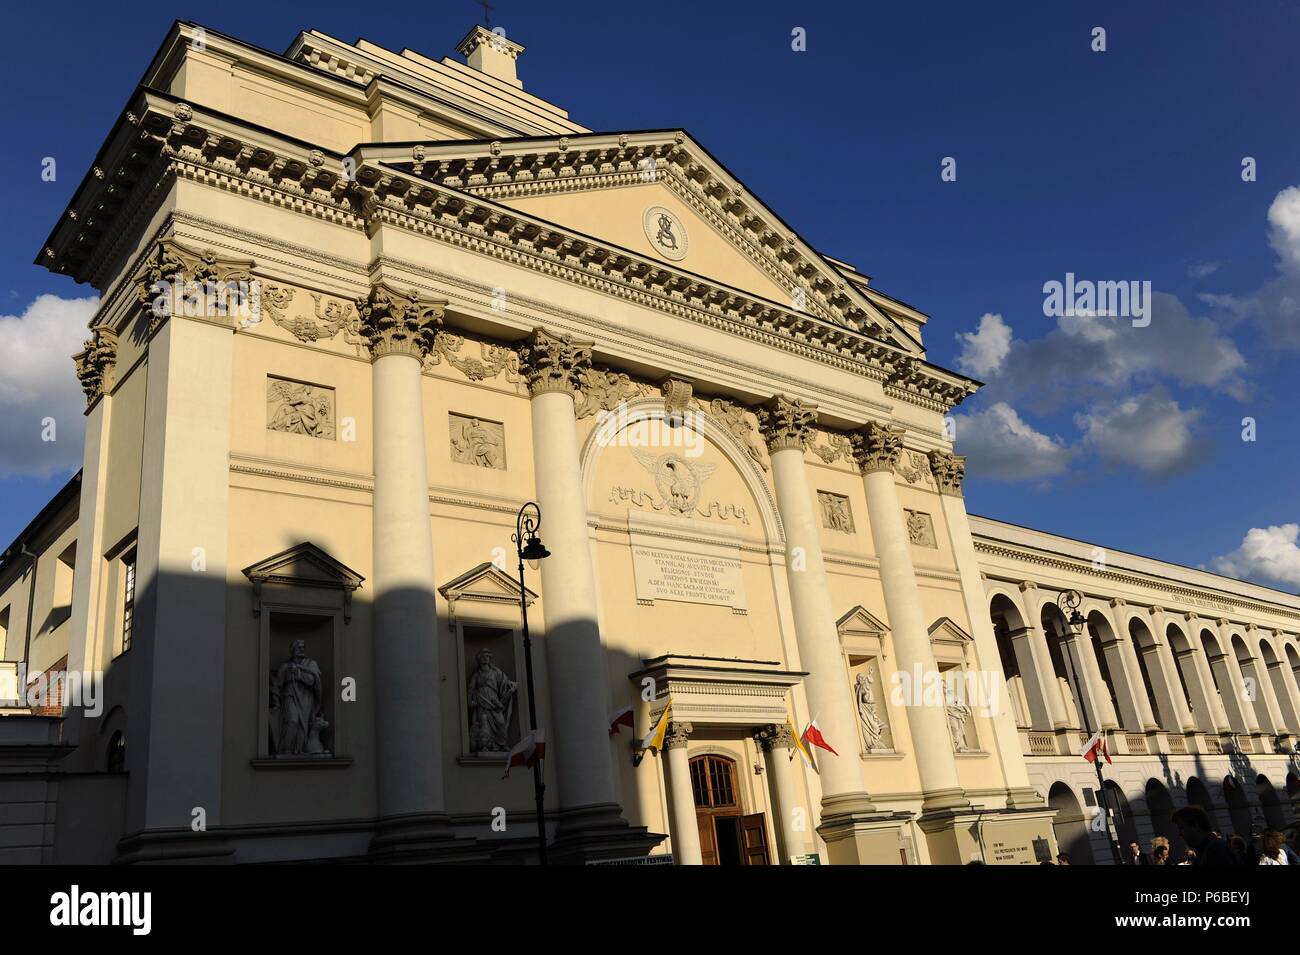 Poland. Warsaw. Saint Anne's Church. Neoclassical facade built by Chrystian Piotr Aigner (1756-1841). 18th century. Stock Photo